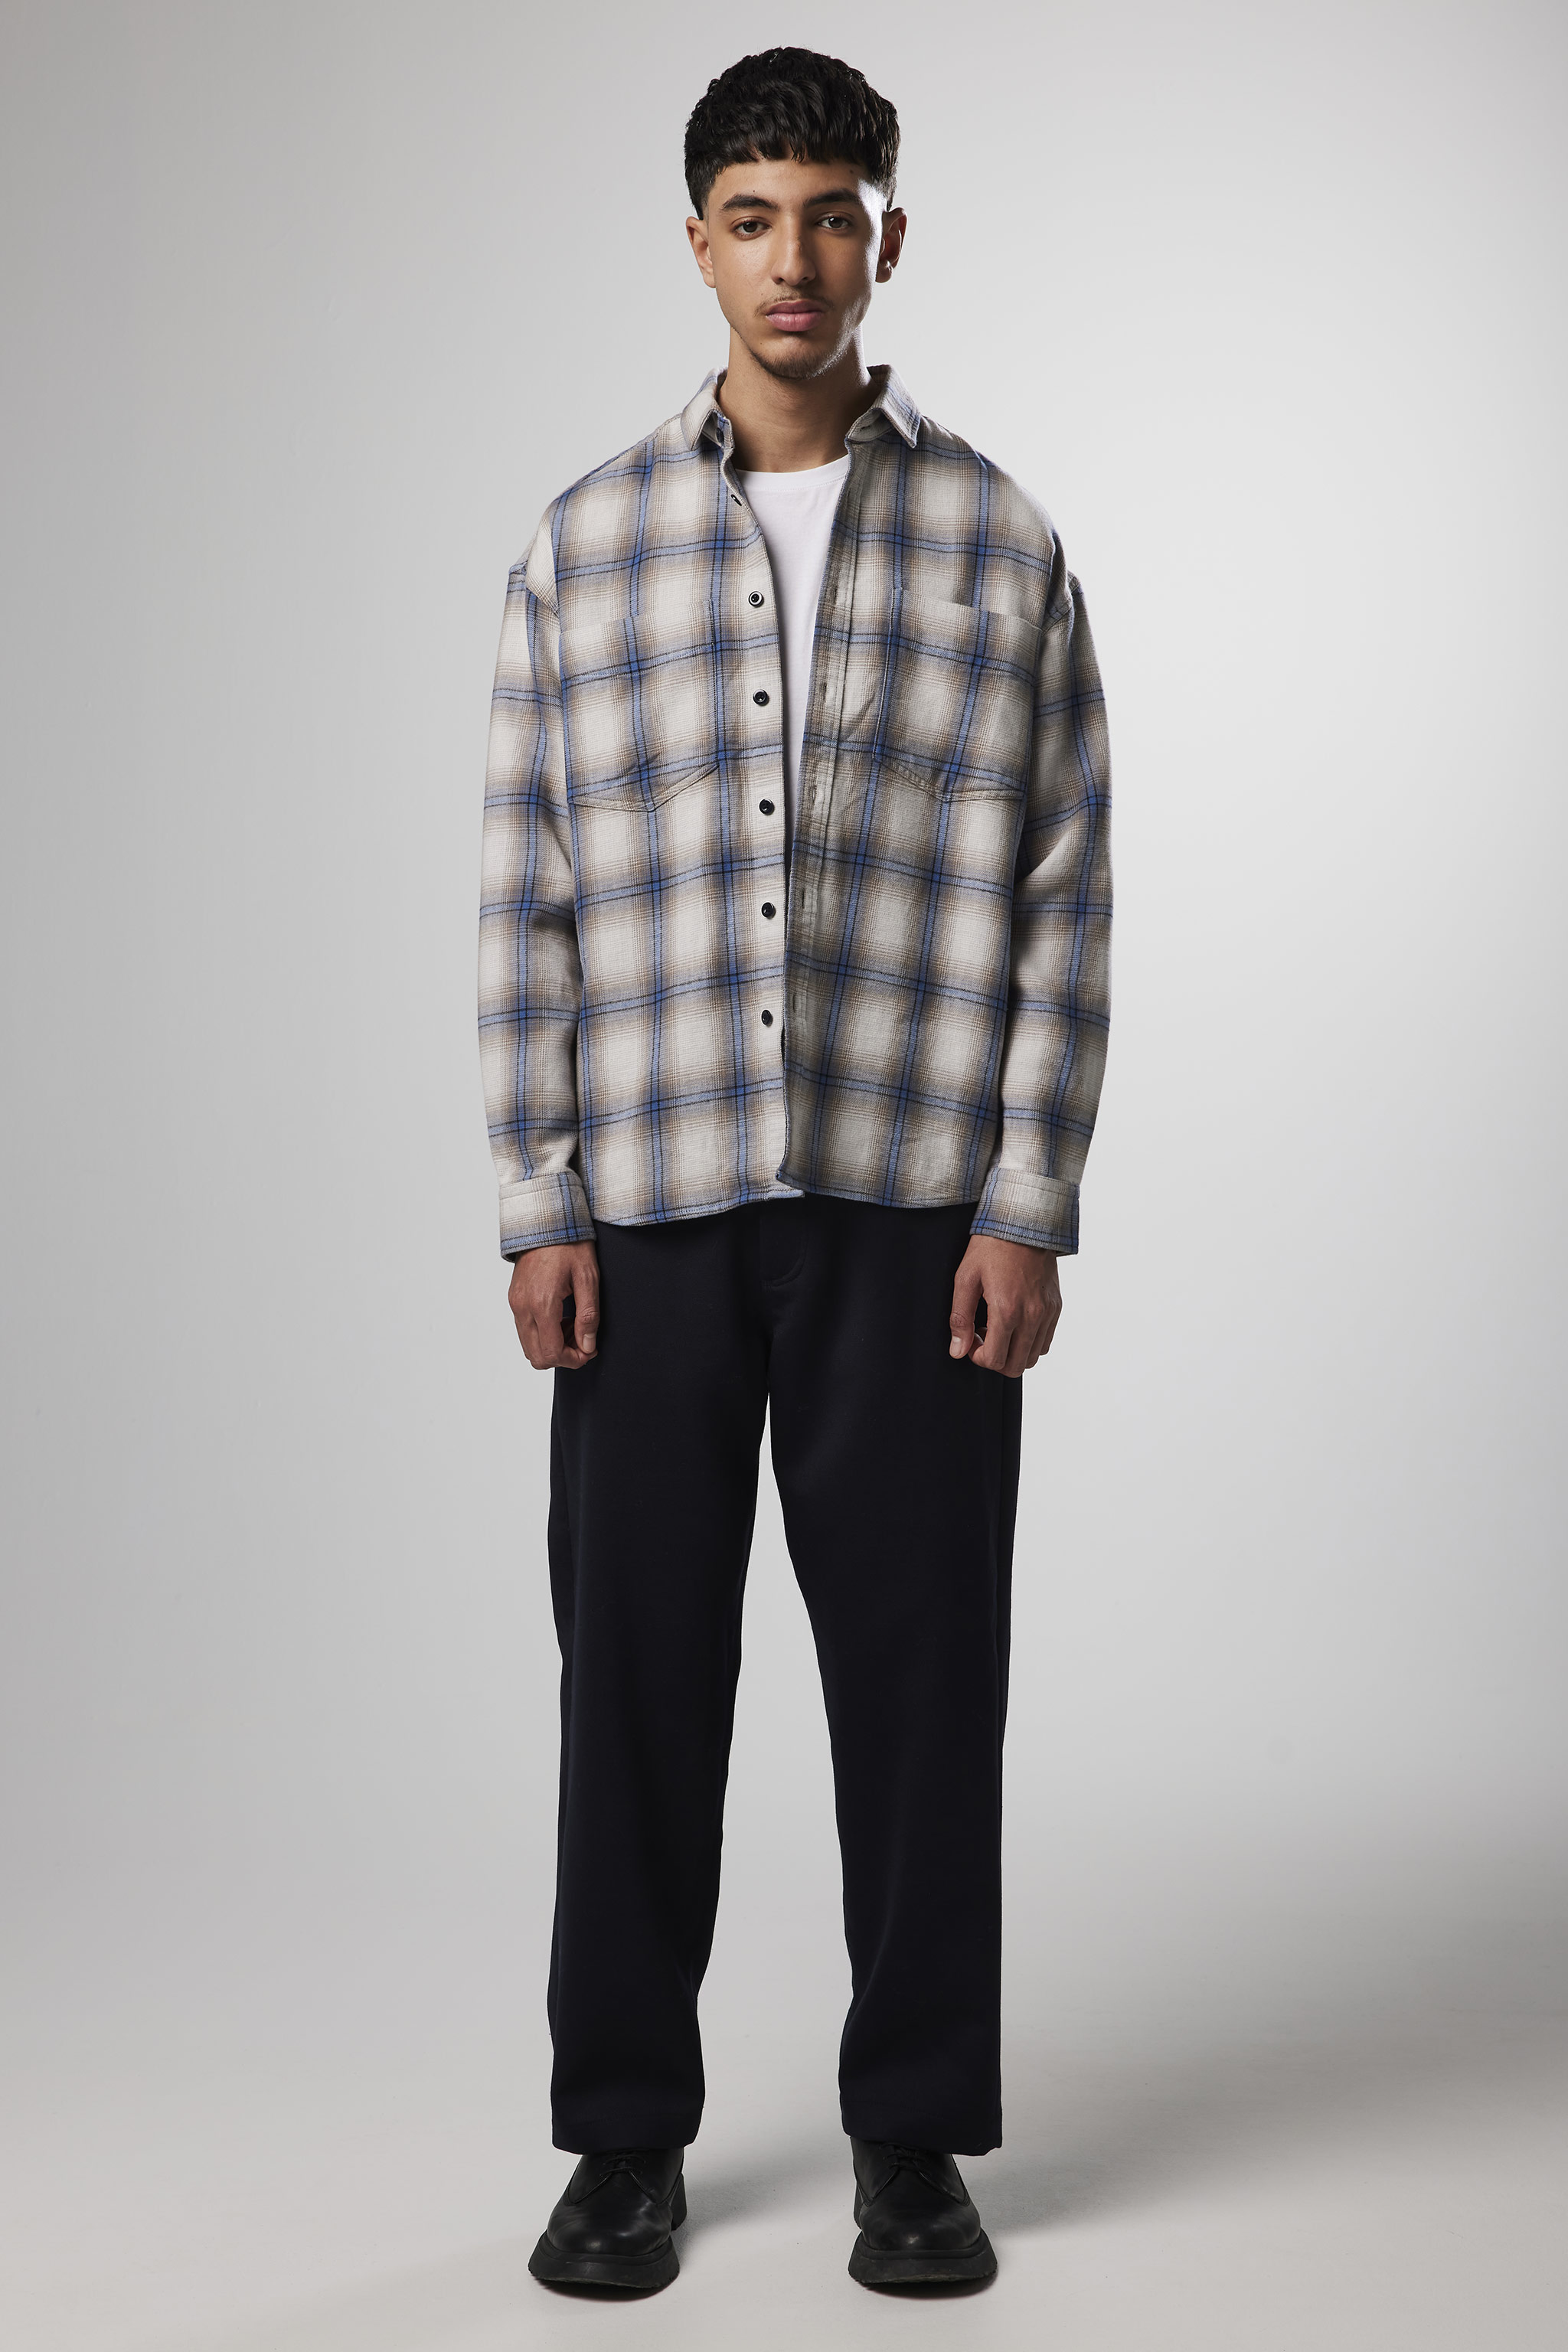 Deon Western 5298 men's shirt - Grey Check #795 - Buy online at NN.07®